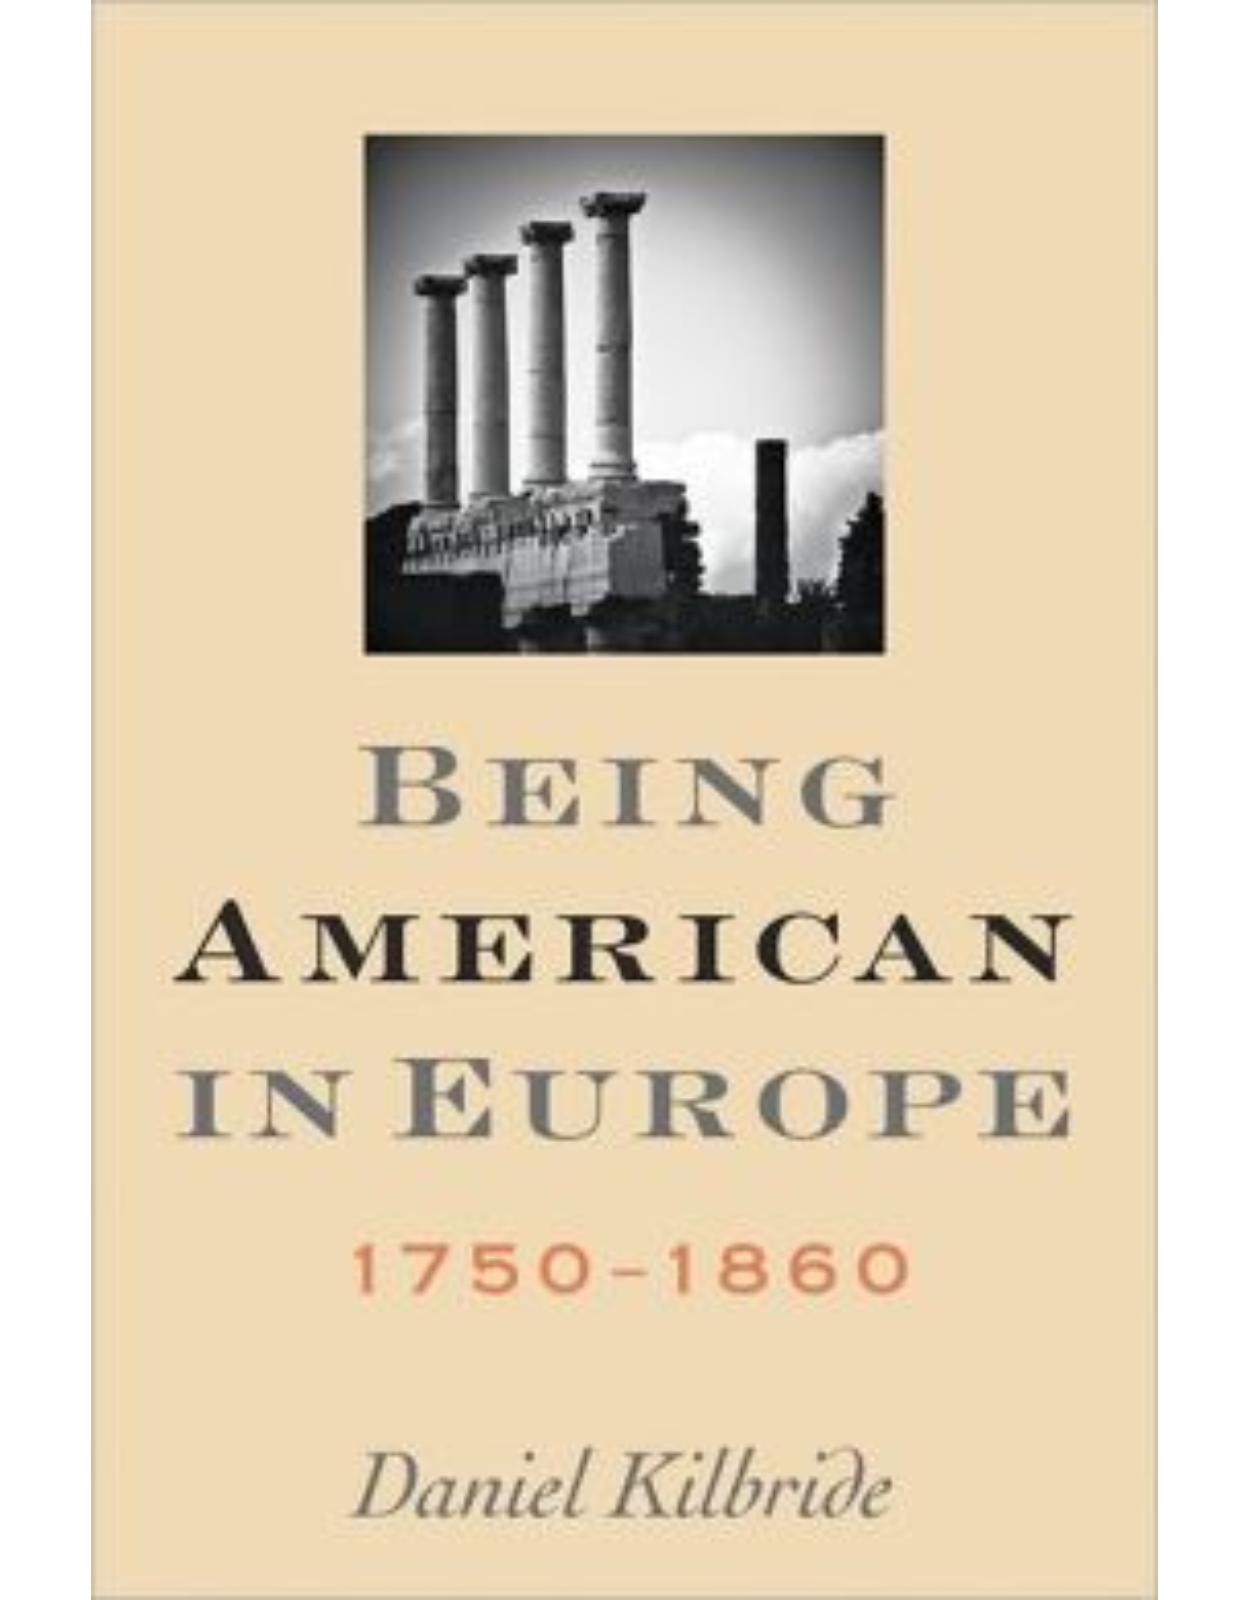 Being American in Europe, 1750-1860.